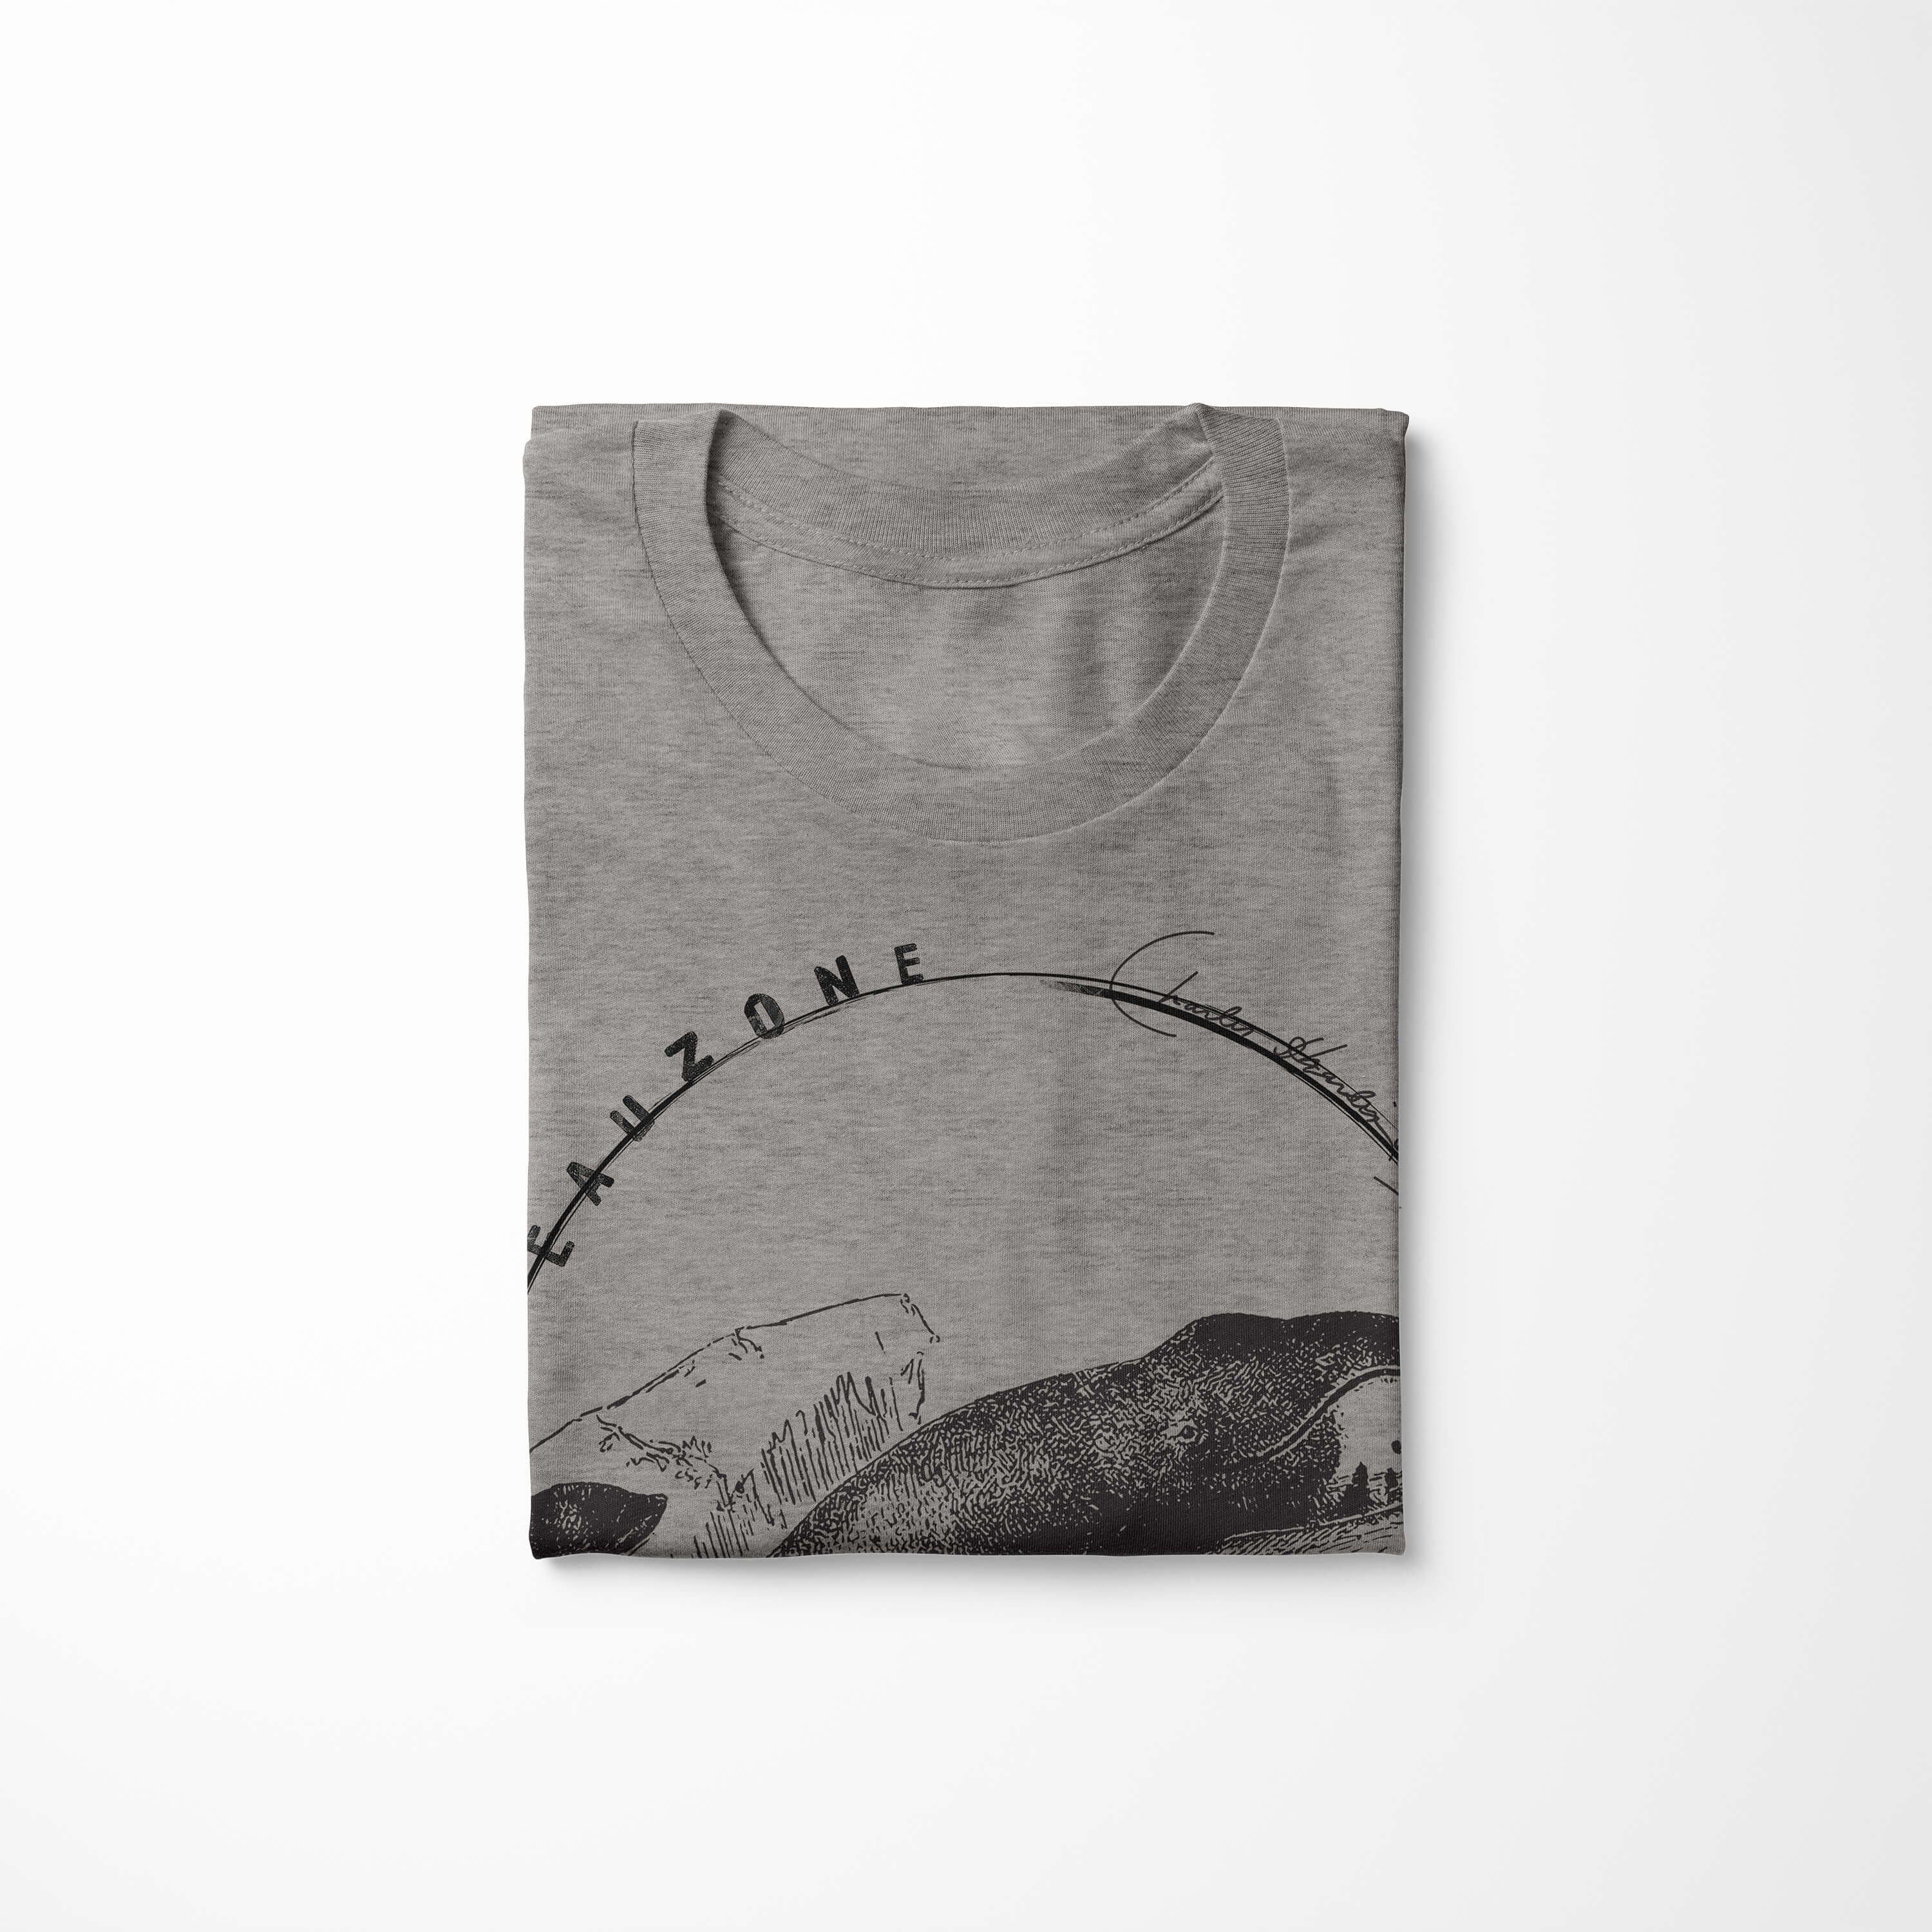 T-Shirt Sinus T-Shirt Herren Ash Evolution Art Grönlandwal